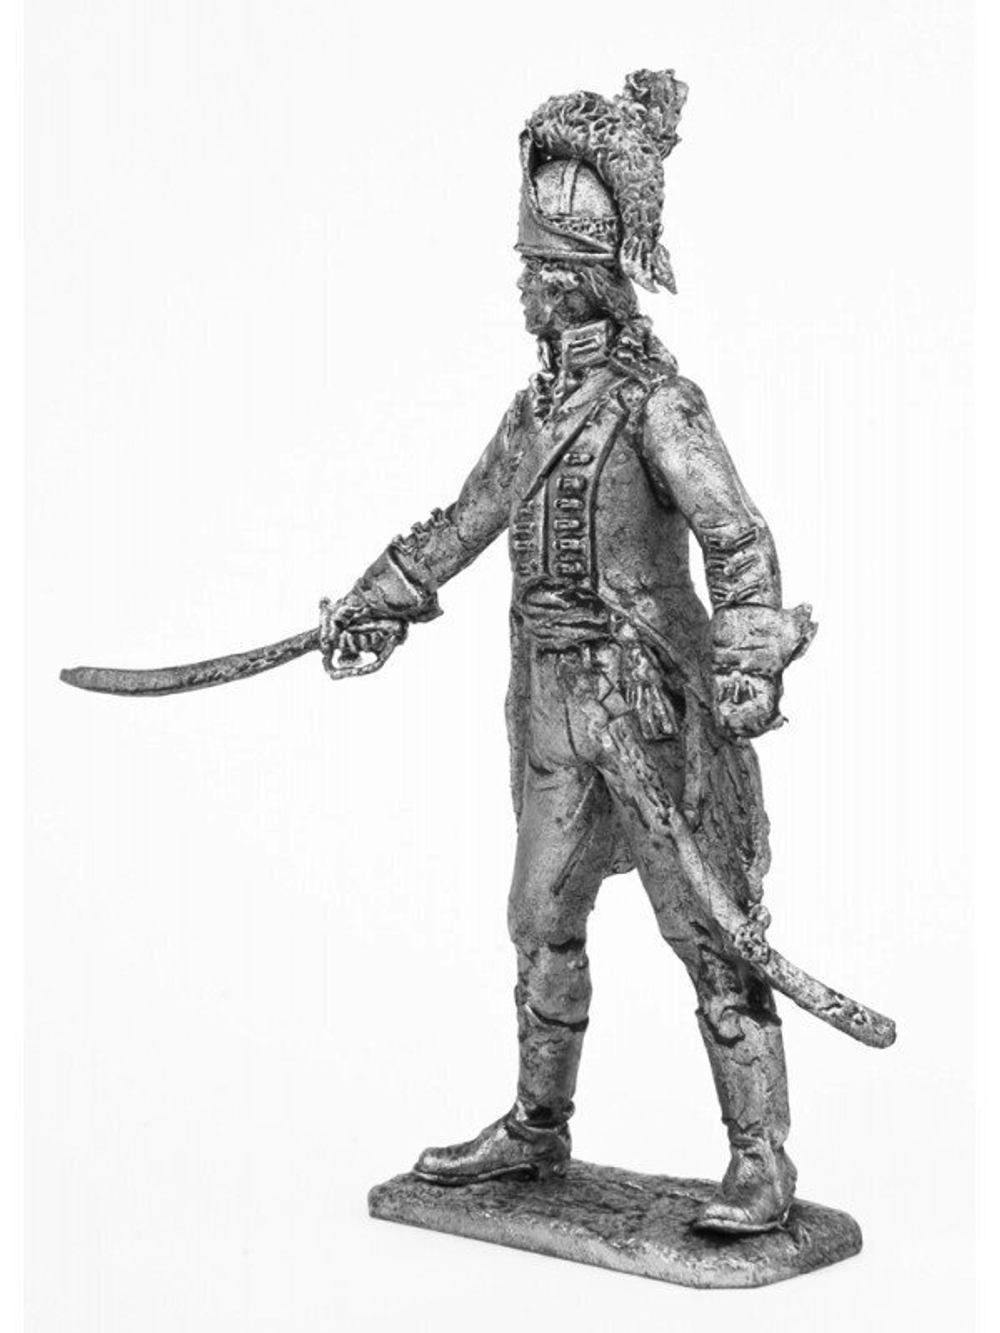 Оловянный солдатик офицер шеволежеров 1803 год. Княжество Хессен-Дармштадт